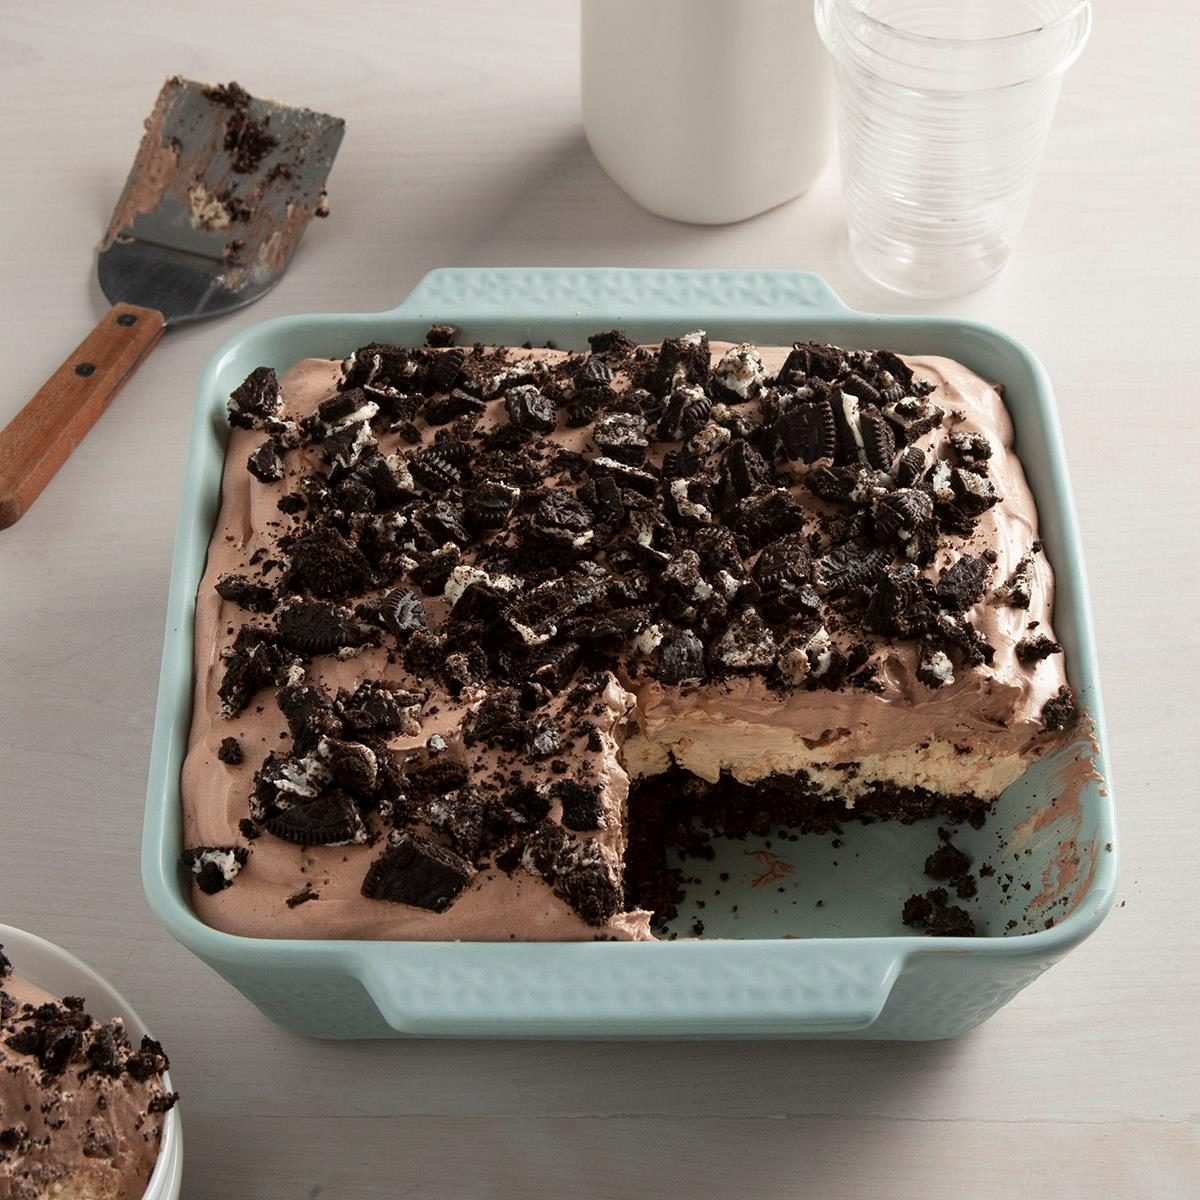 Peanut Butter Chocolate Dessert Recipe: How to Make It | Taste of Home